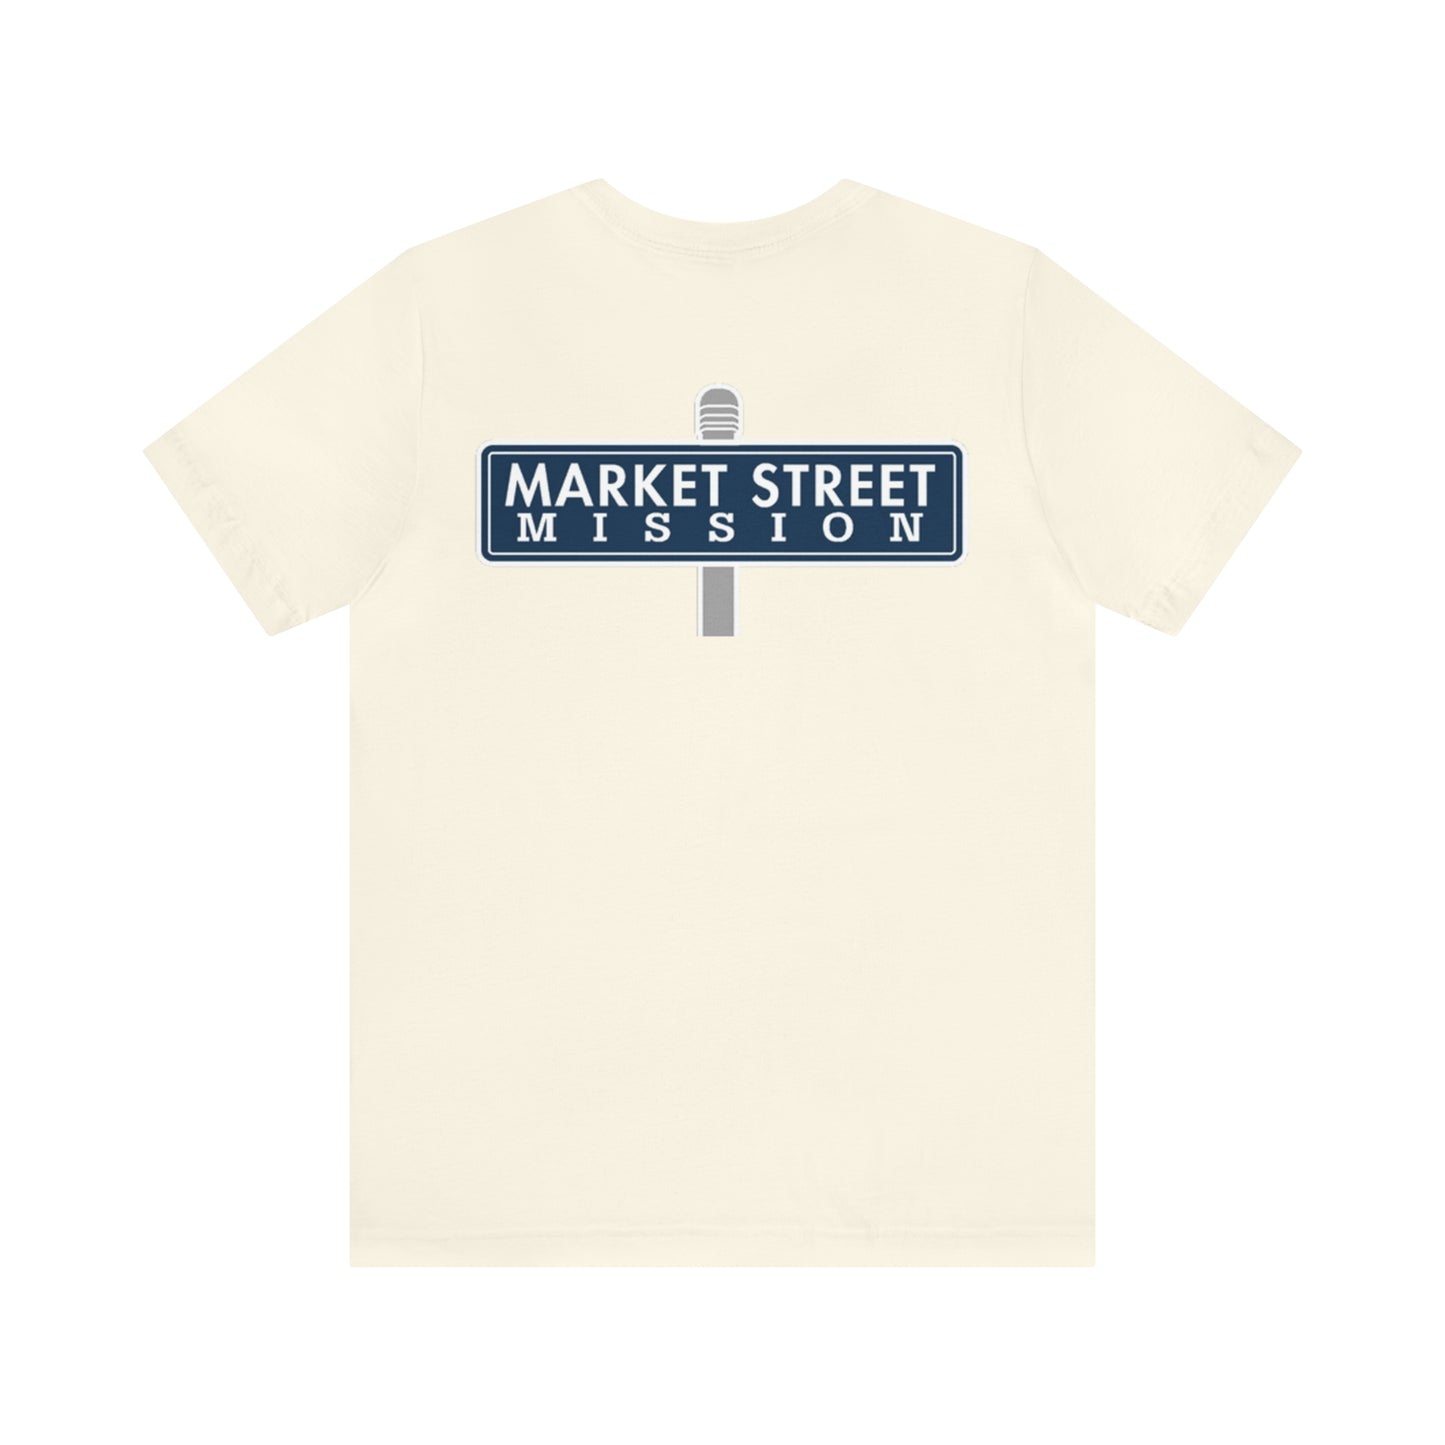 MSM Street Sign T-Shirt  - 11 Colors - BESTSELLER!